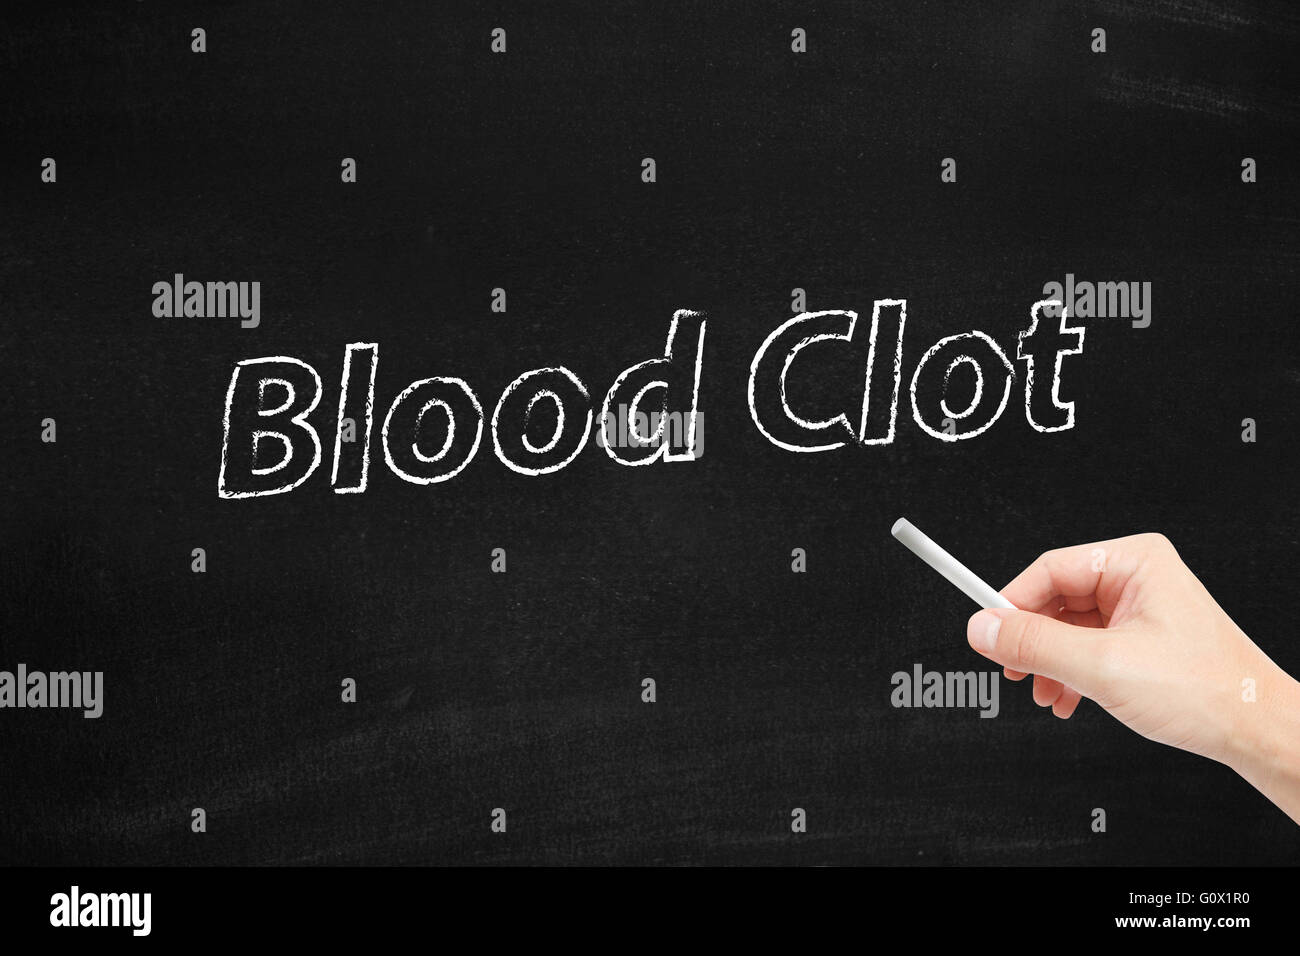 Blood clot written on blackboard Stock Photo